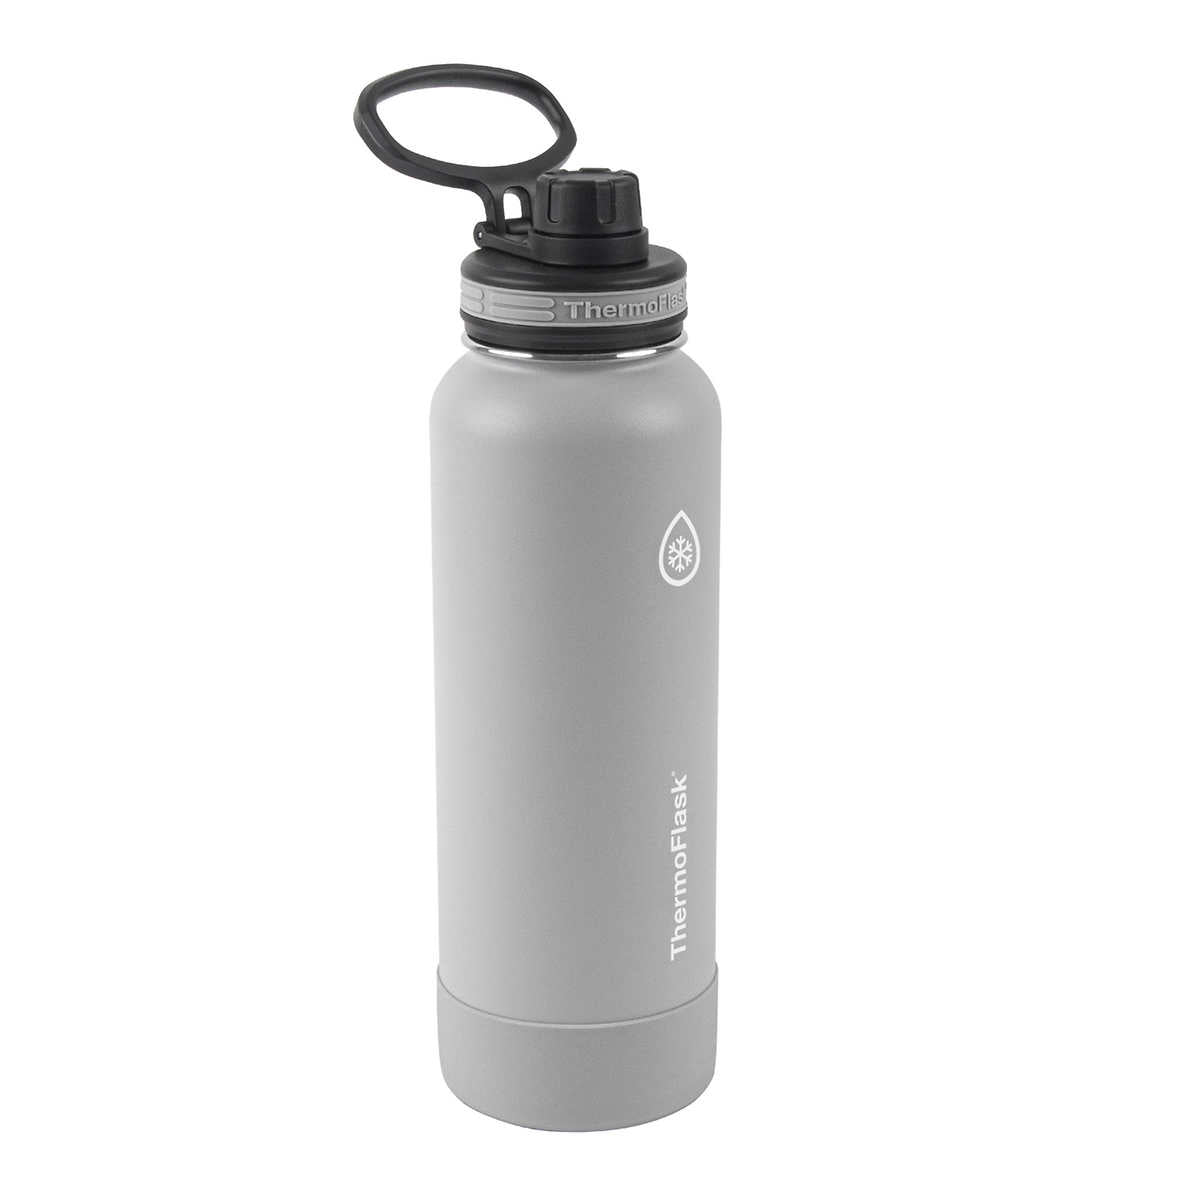 ThermoFlask botella de 1.2 Litros